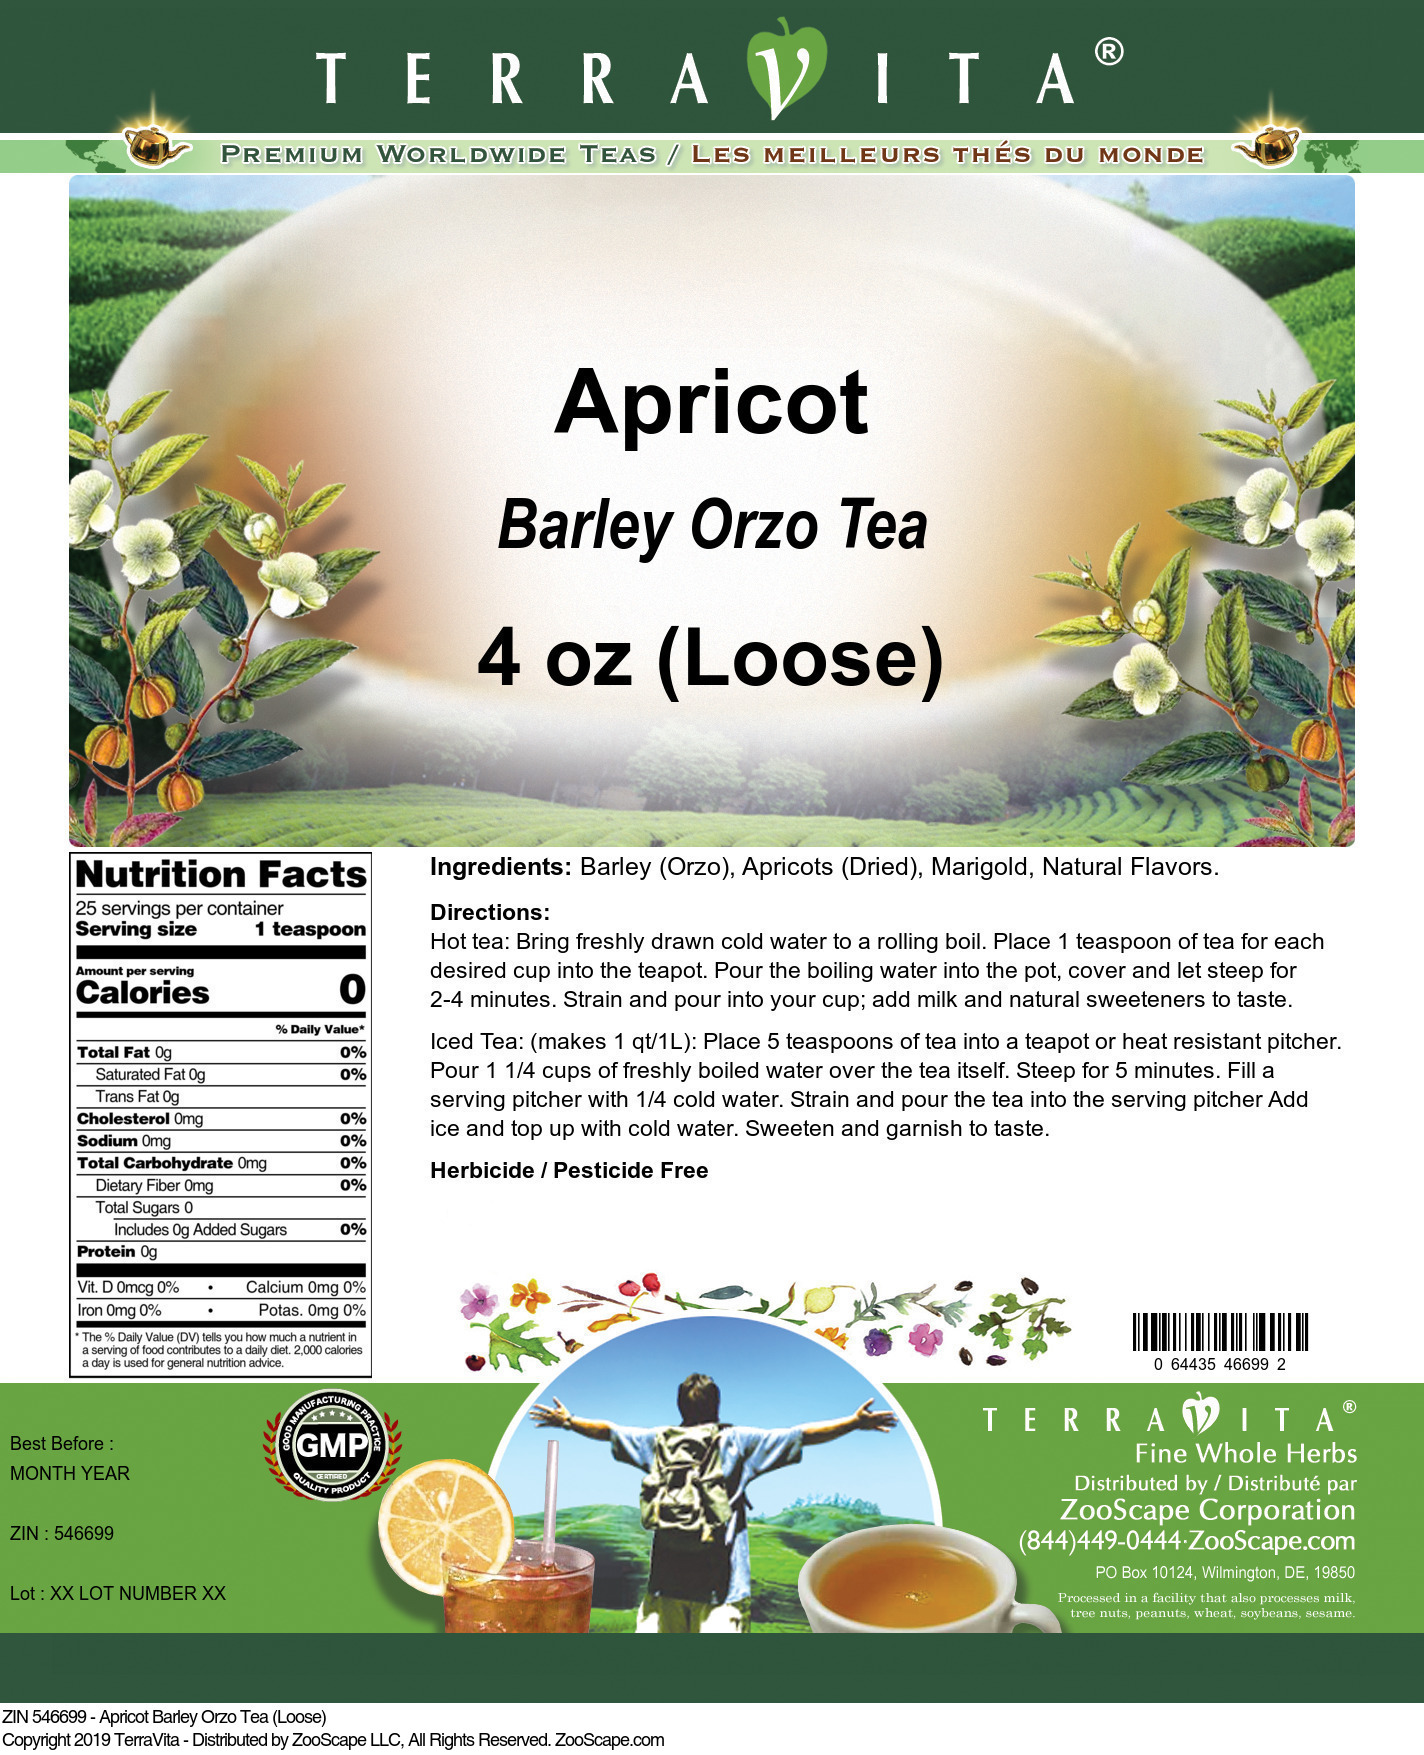 Apricot Barley Orzo Tea (Loose) - Label